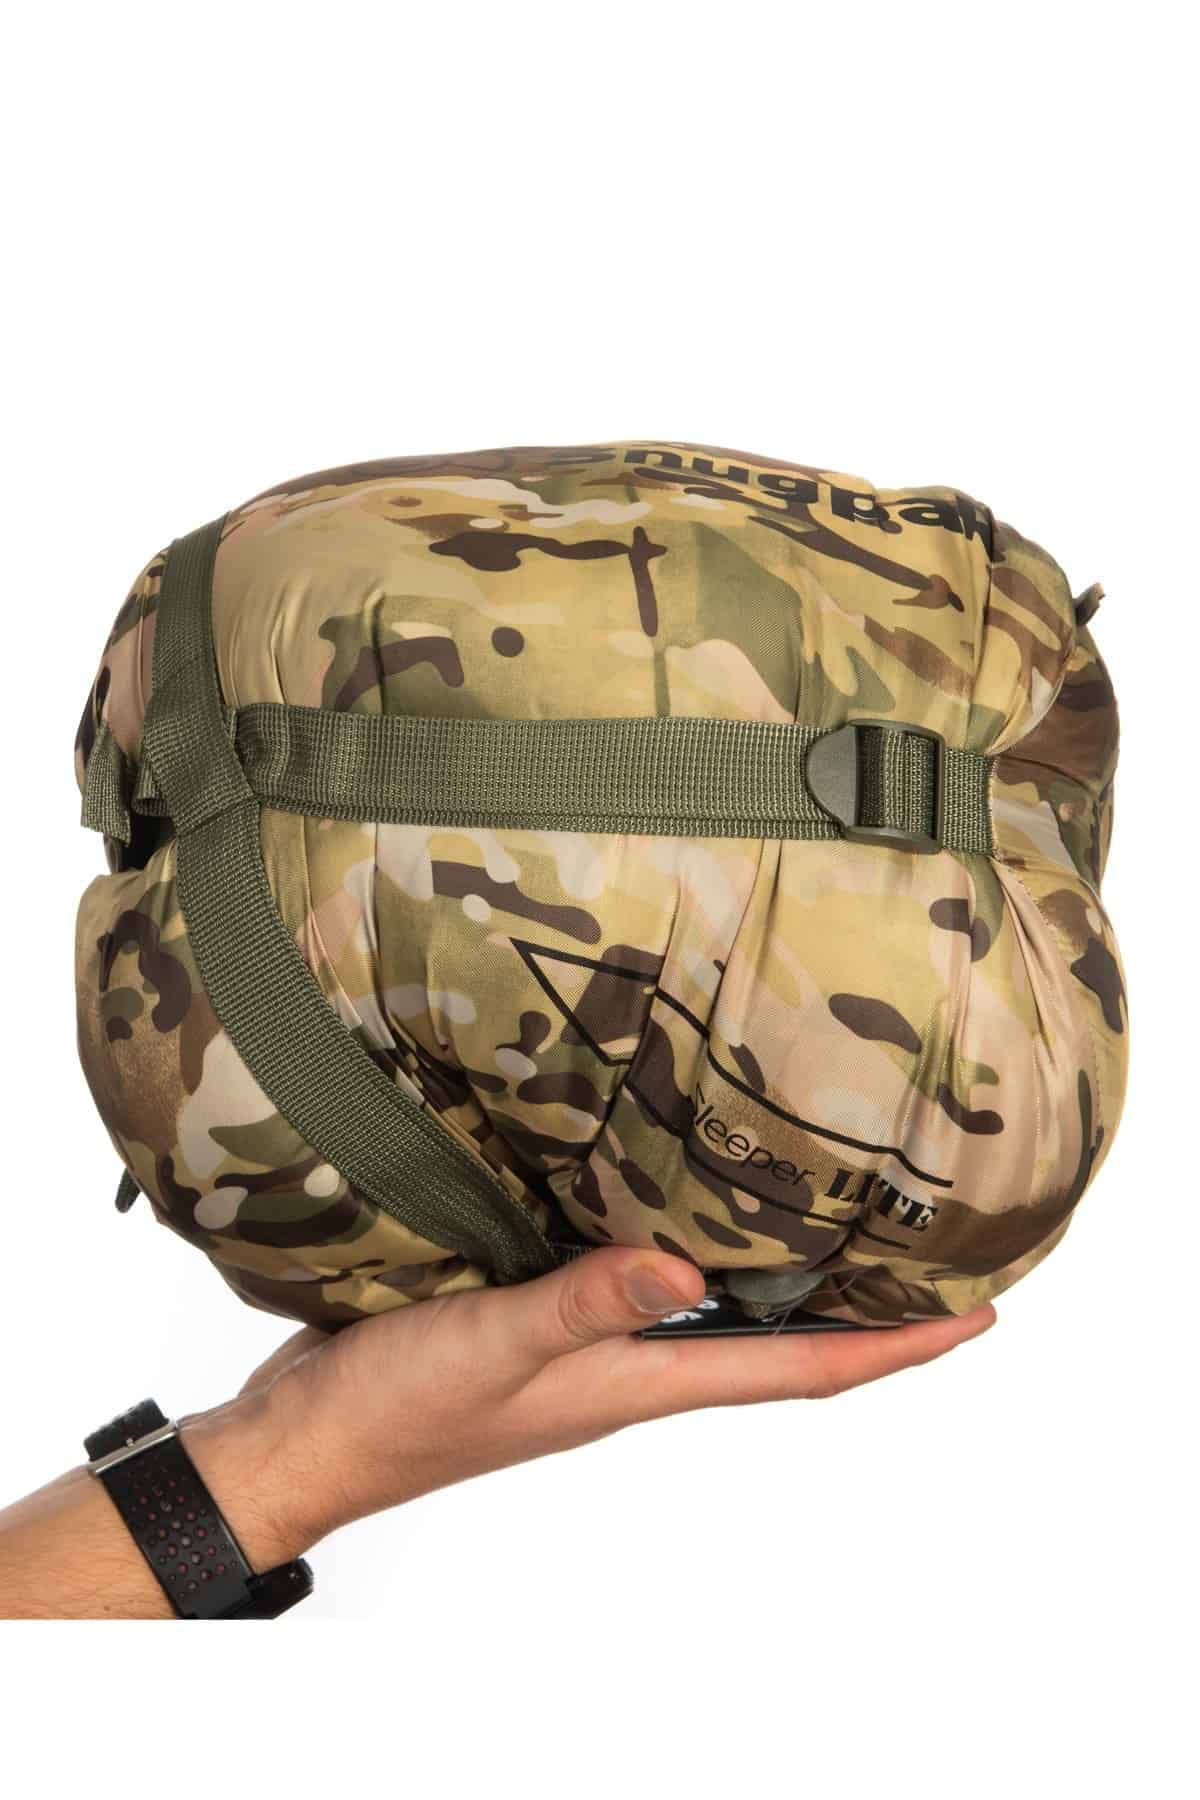 Snugpak sovepose camouflage - dejlig blød sovepose til store juniorer